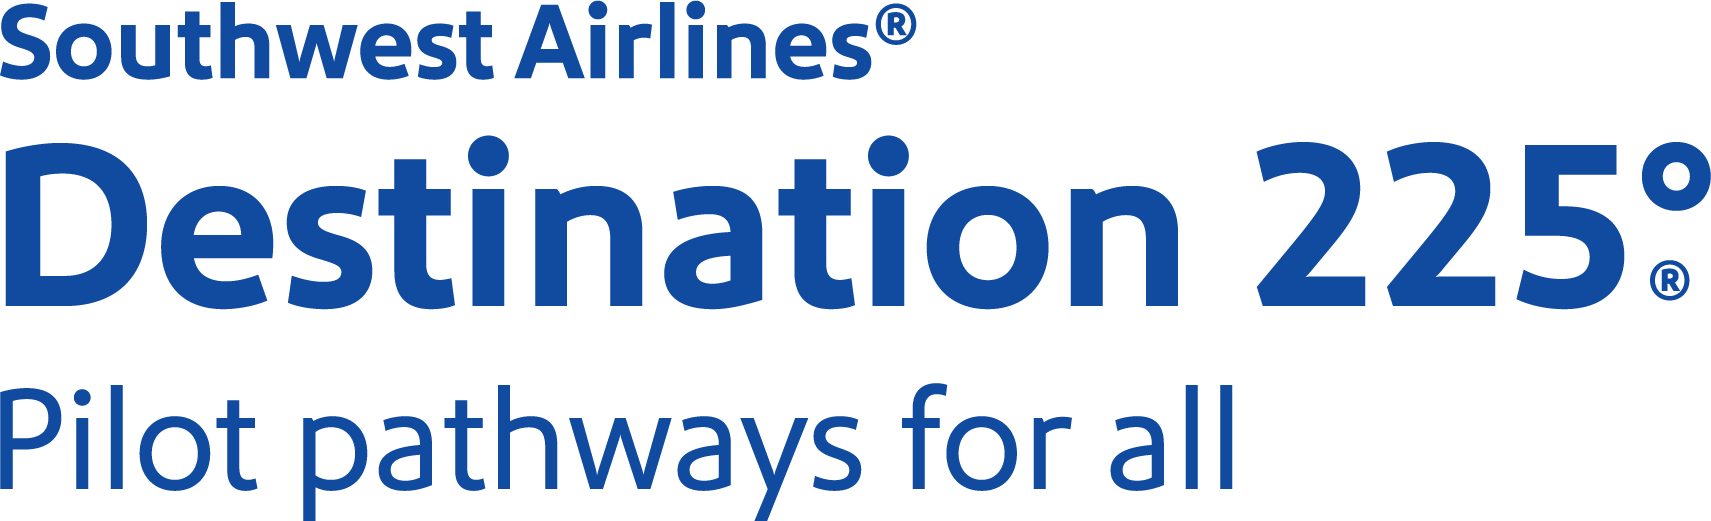 Southwest Airlines Destination 225, Pilot pathways for all